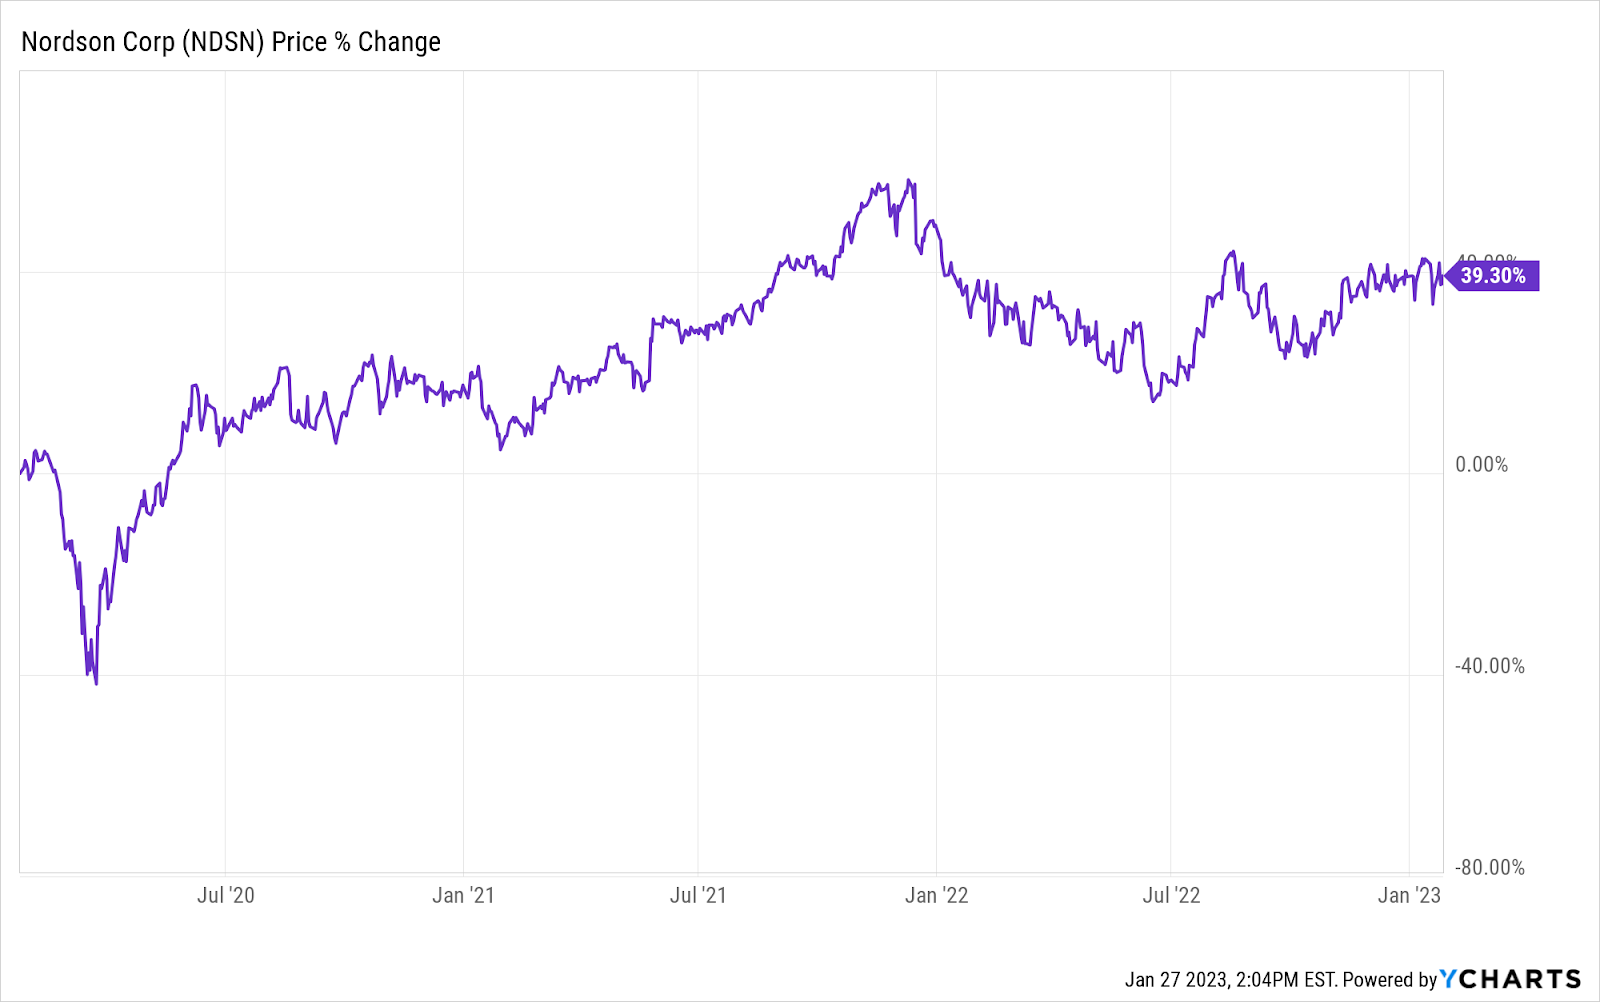 Nordson Corp. (NASDAQ: NDSN) stock chart percentage performance 2022 2023